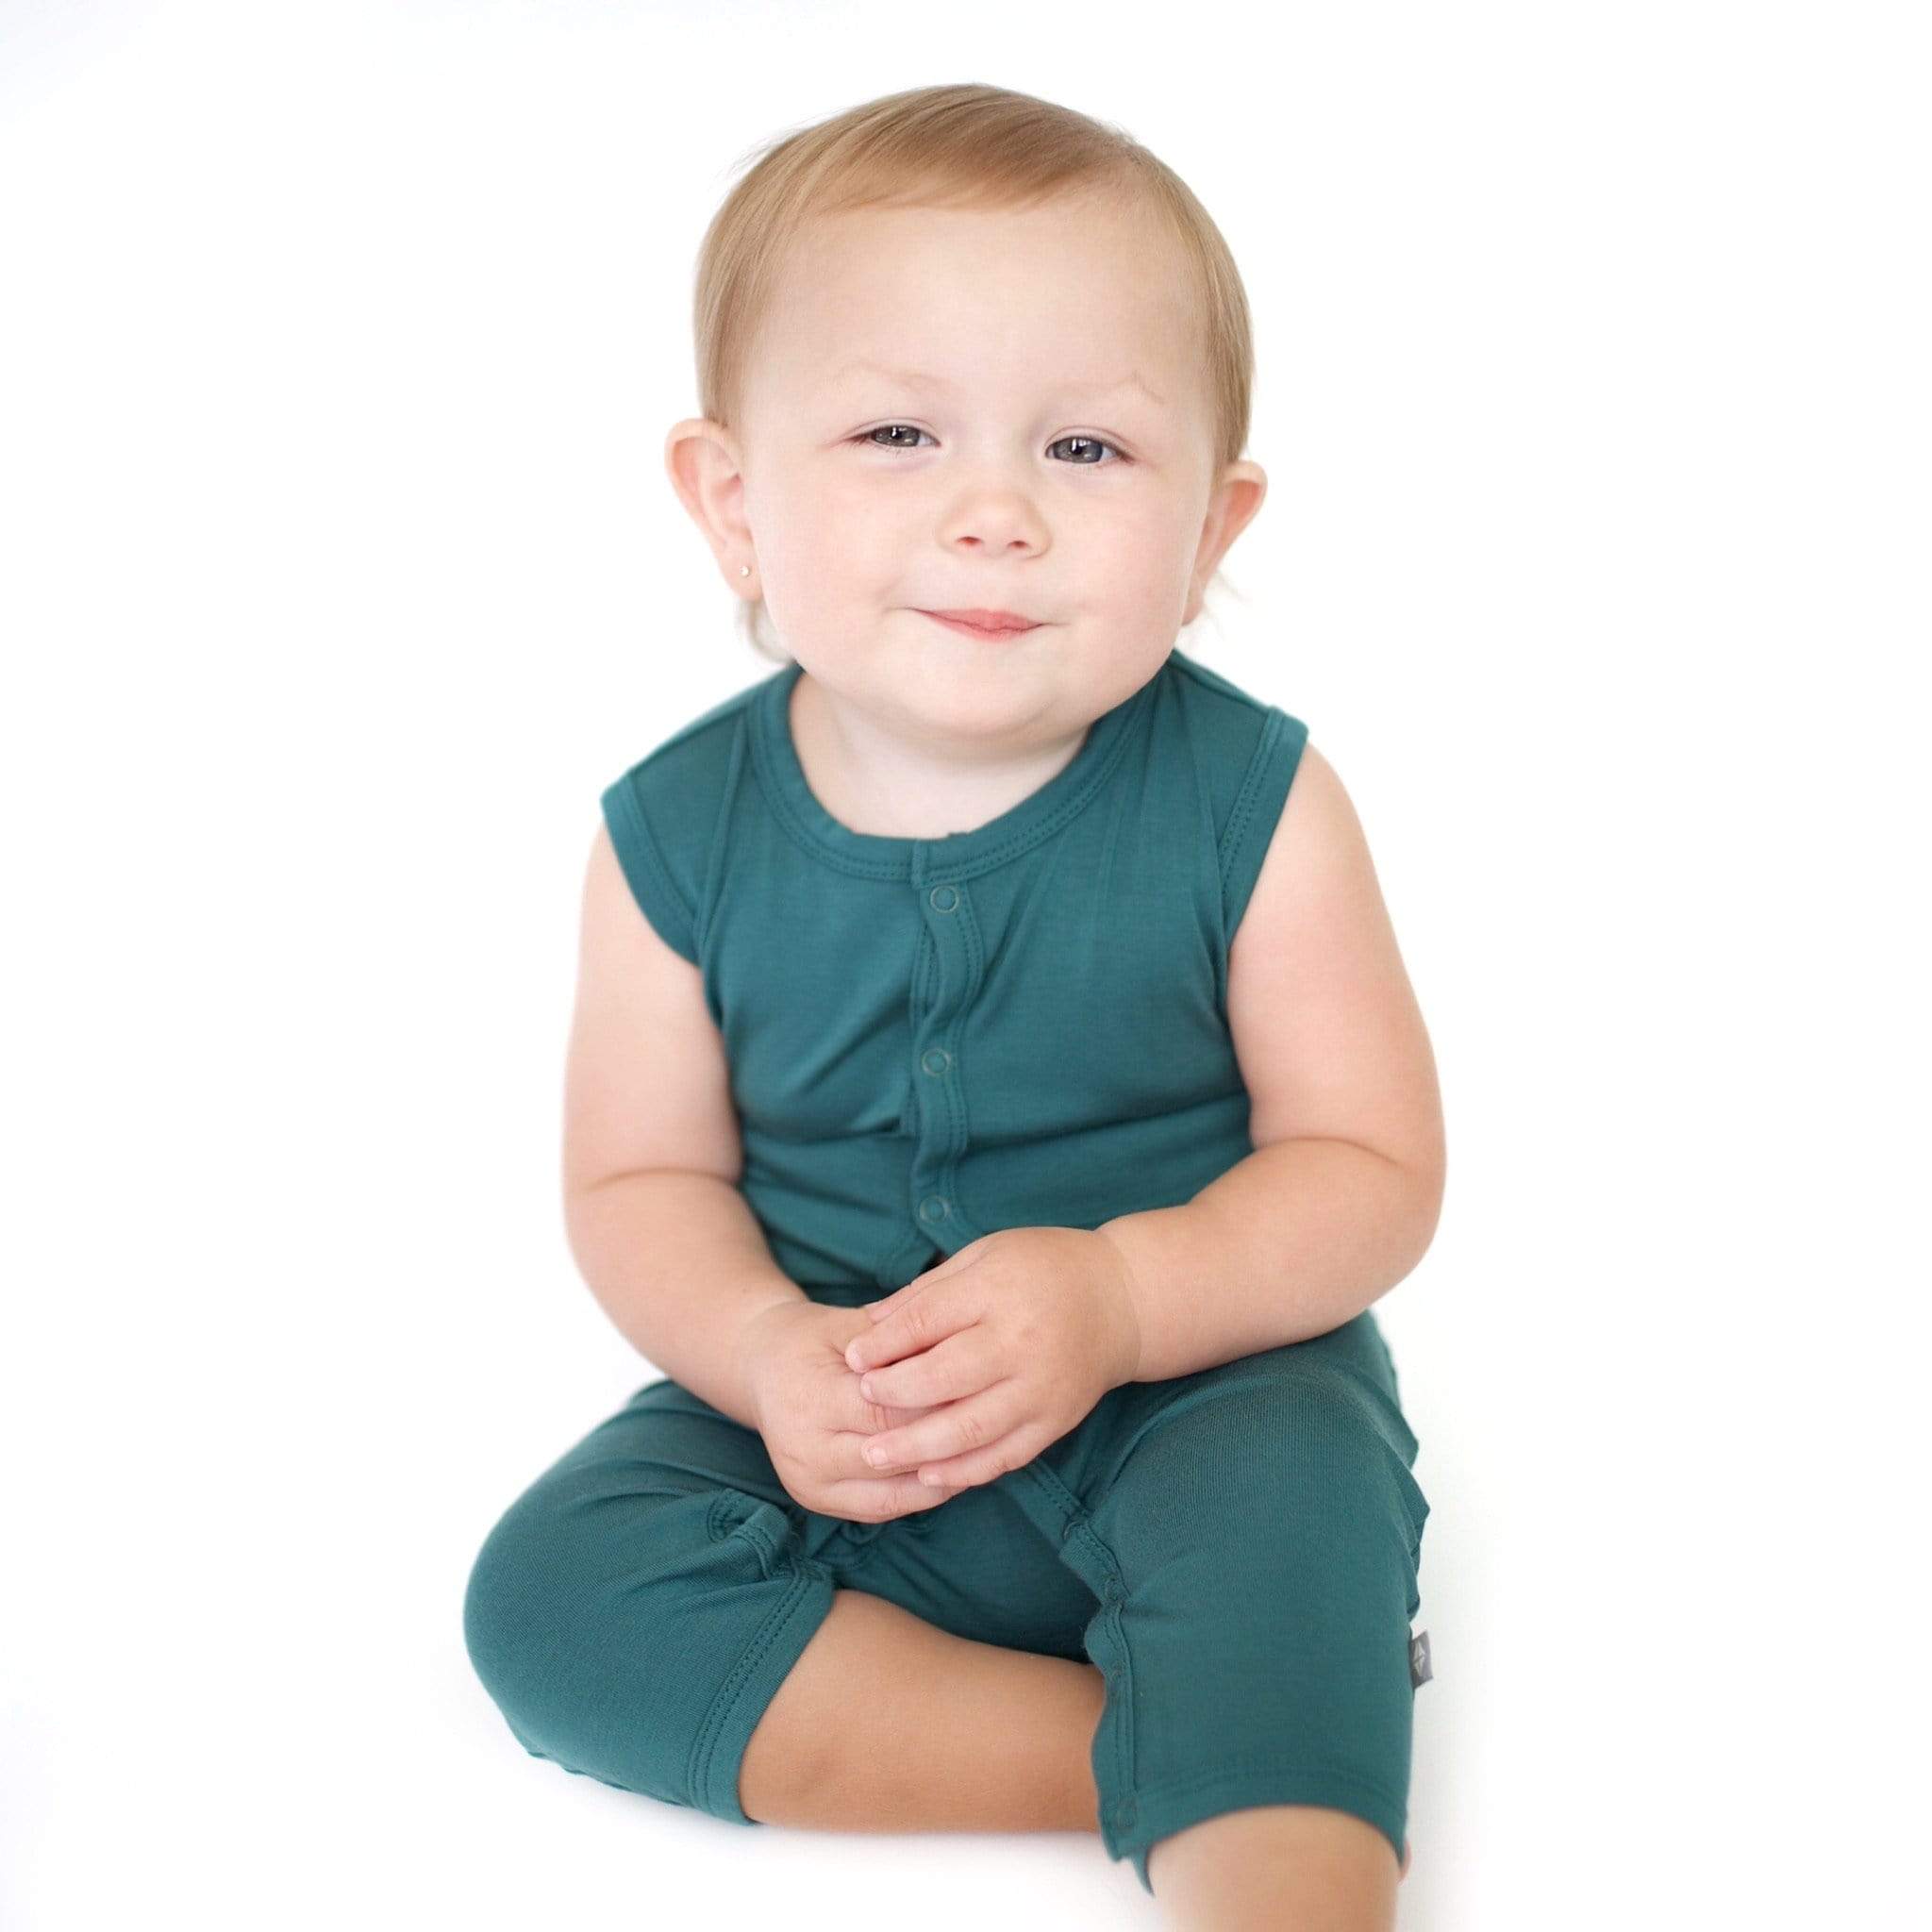 Toddler wearing Kyte Baby Sleeveless capri Romper in Emerald